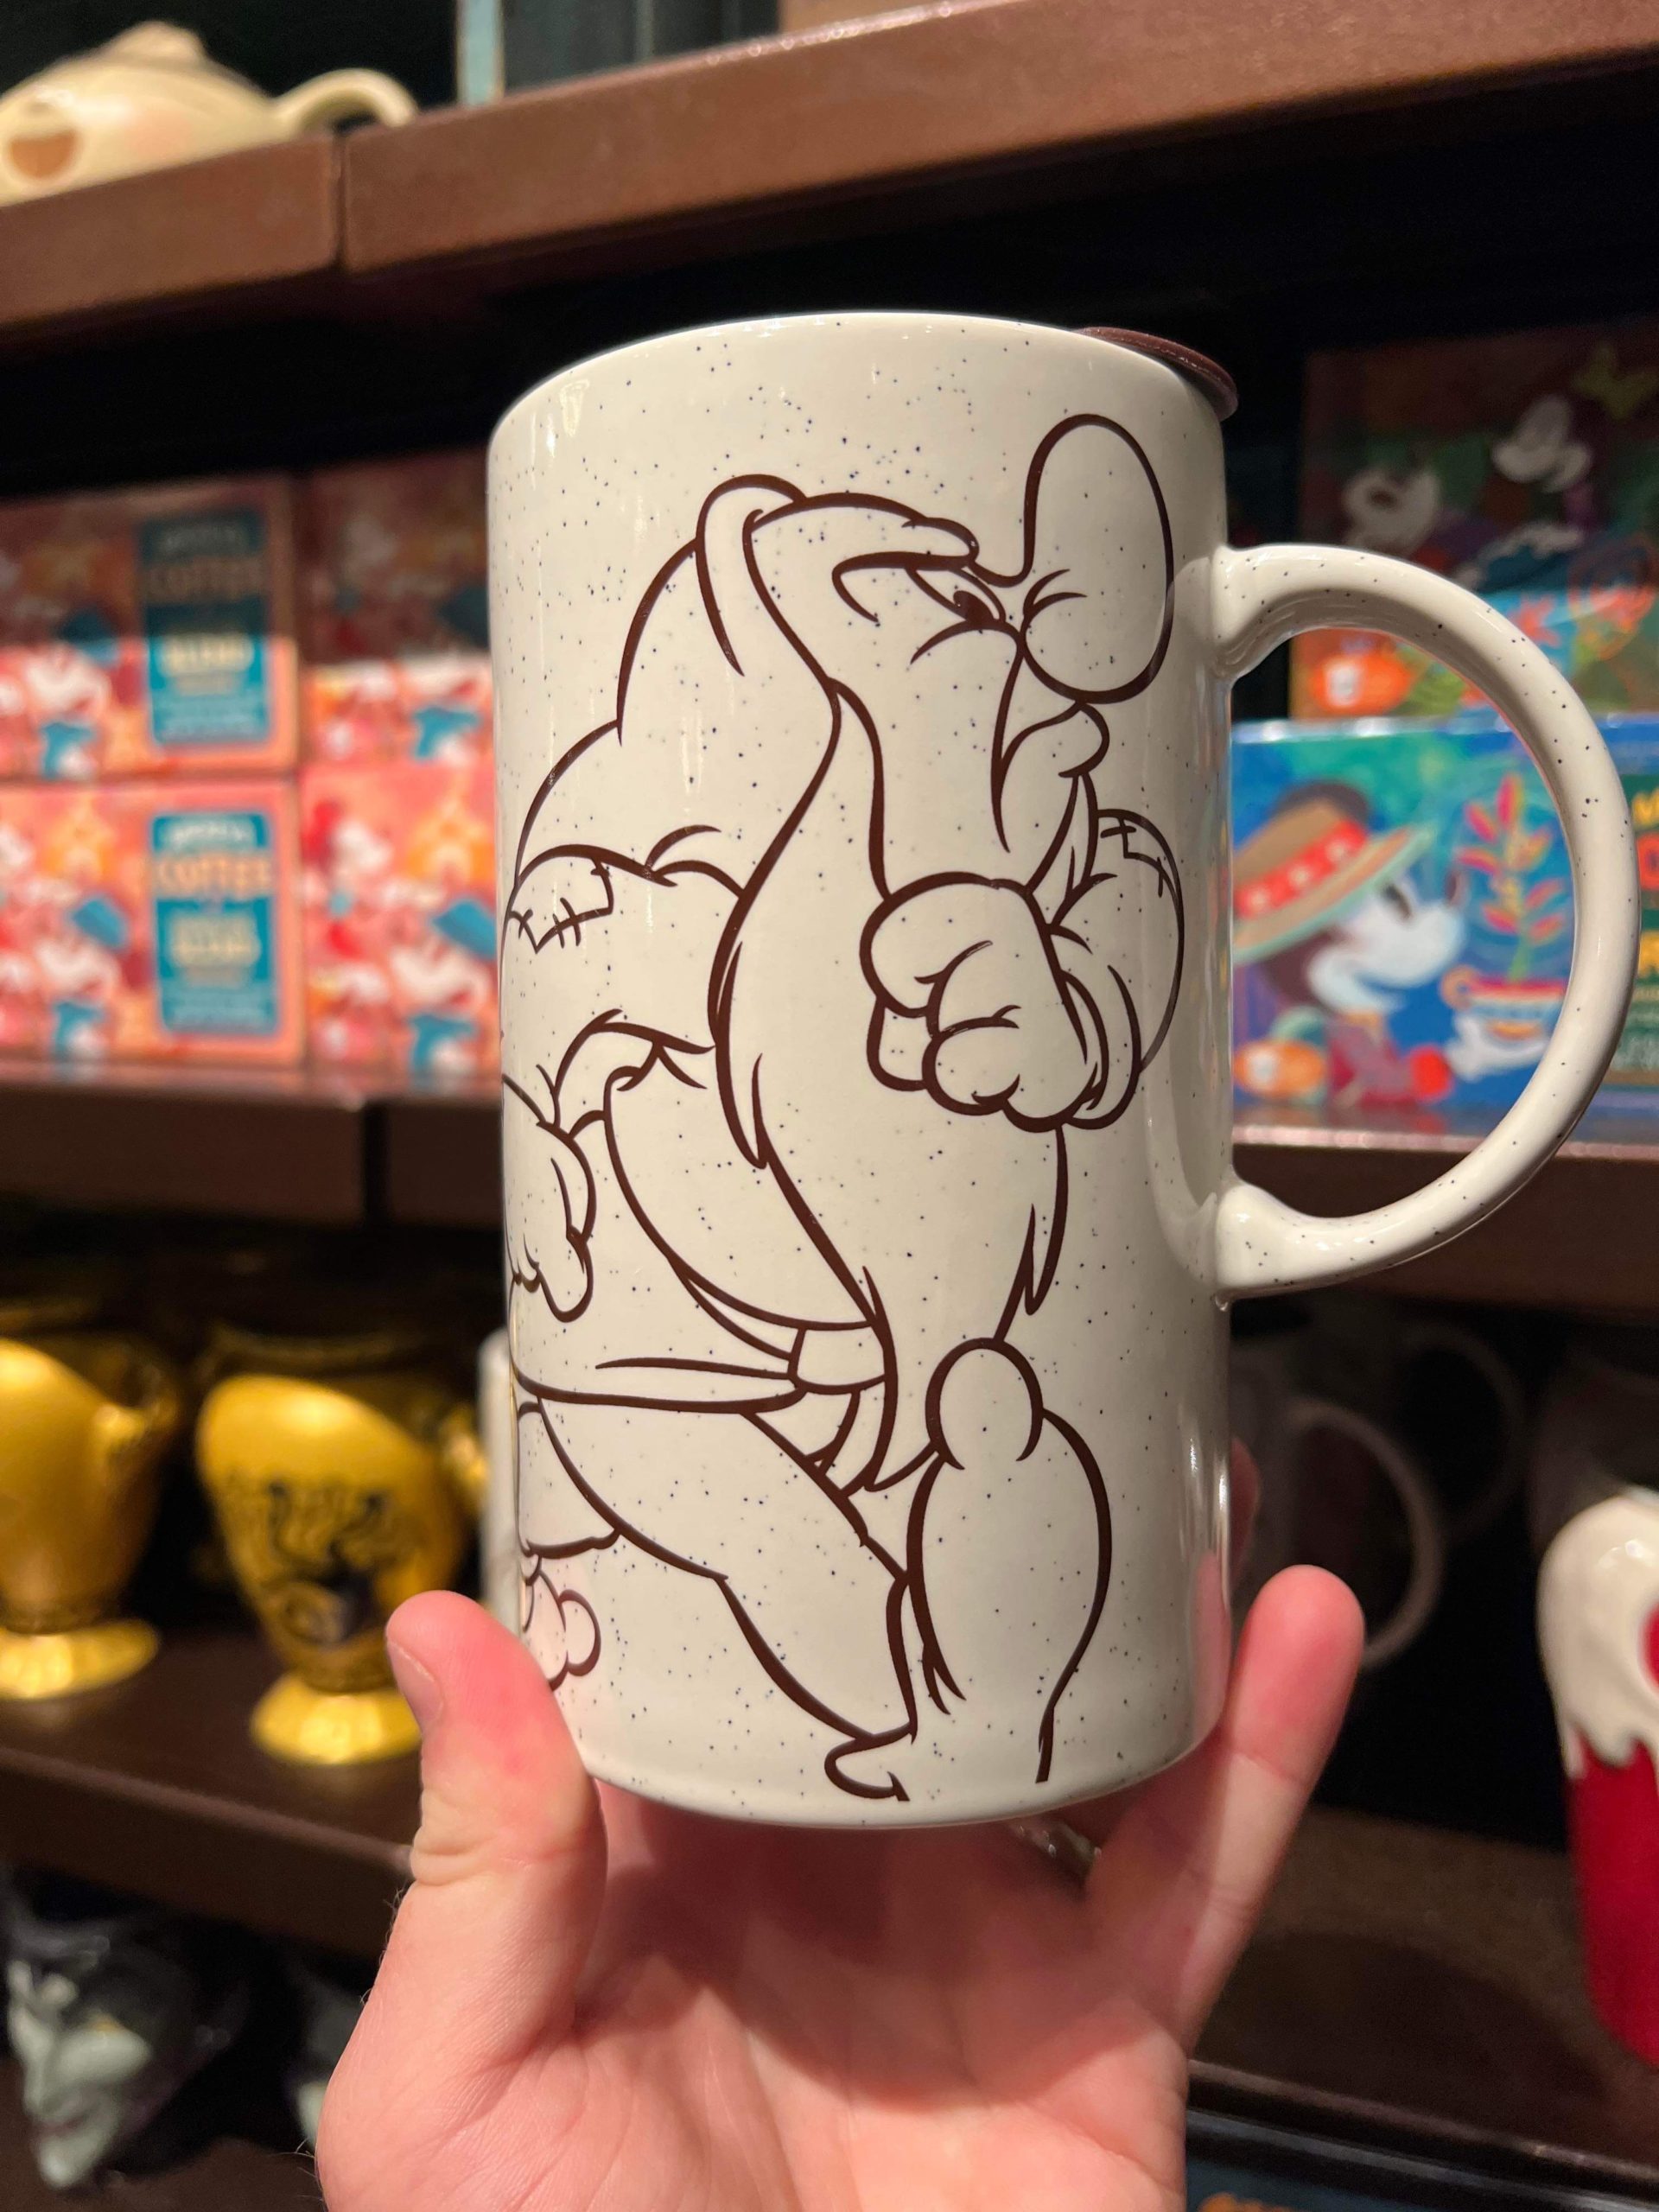 Grumpy mug